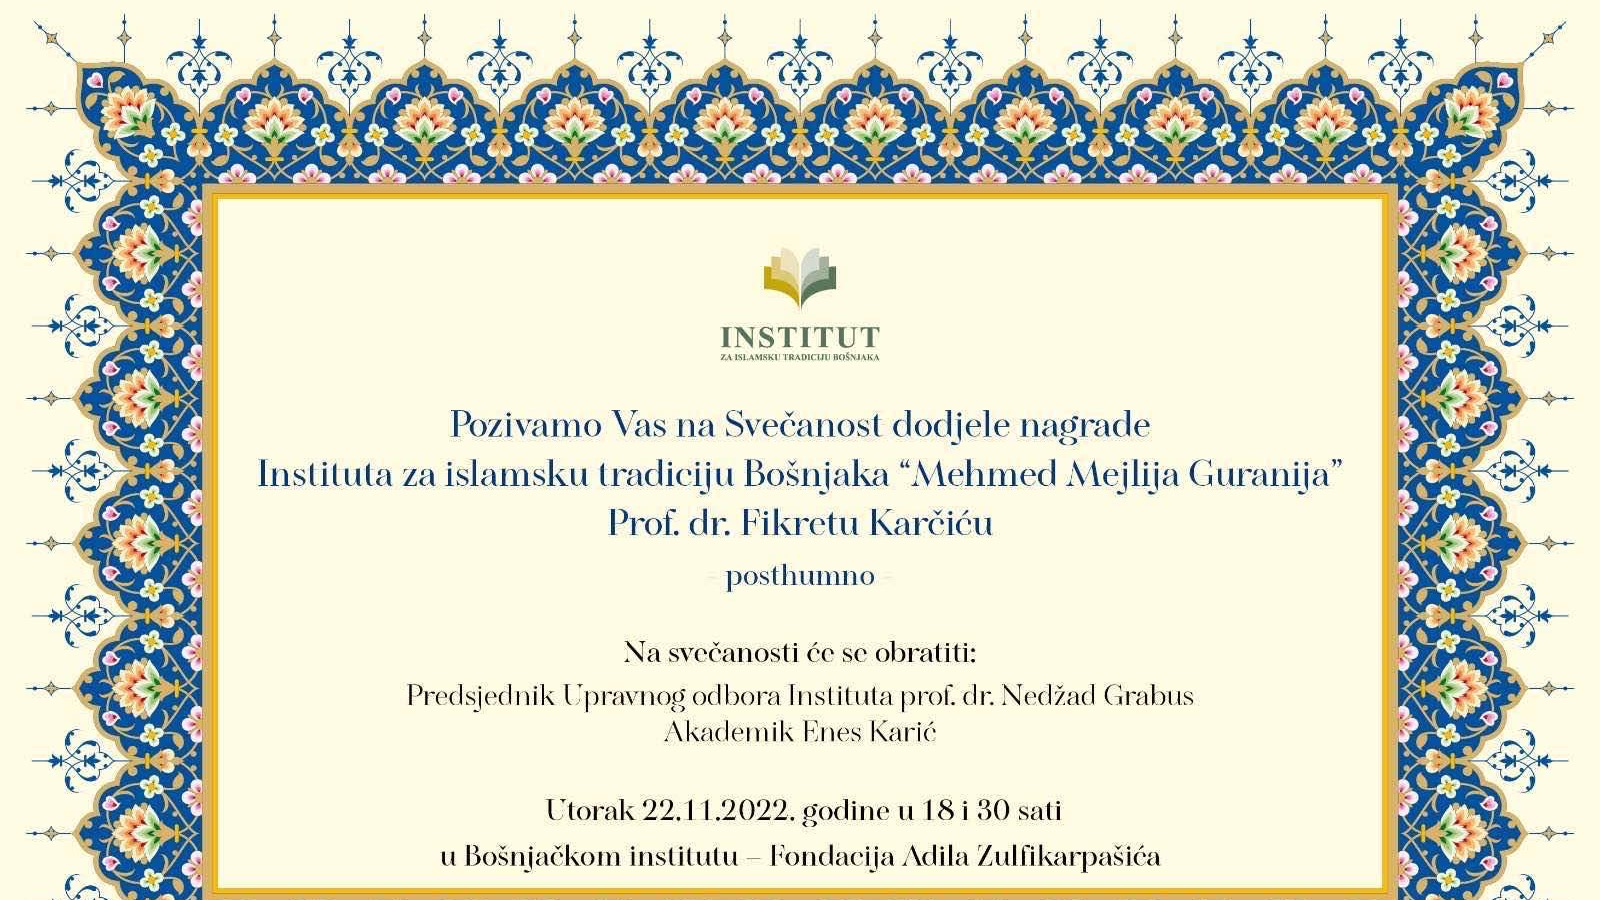 Sutra svečanost dodjele nagrade "Mehmed Mejlija Guranija" posthumno prof. dr. Fikretu Karčiću 